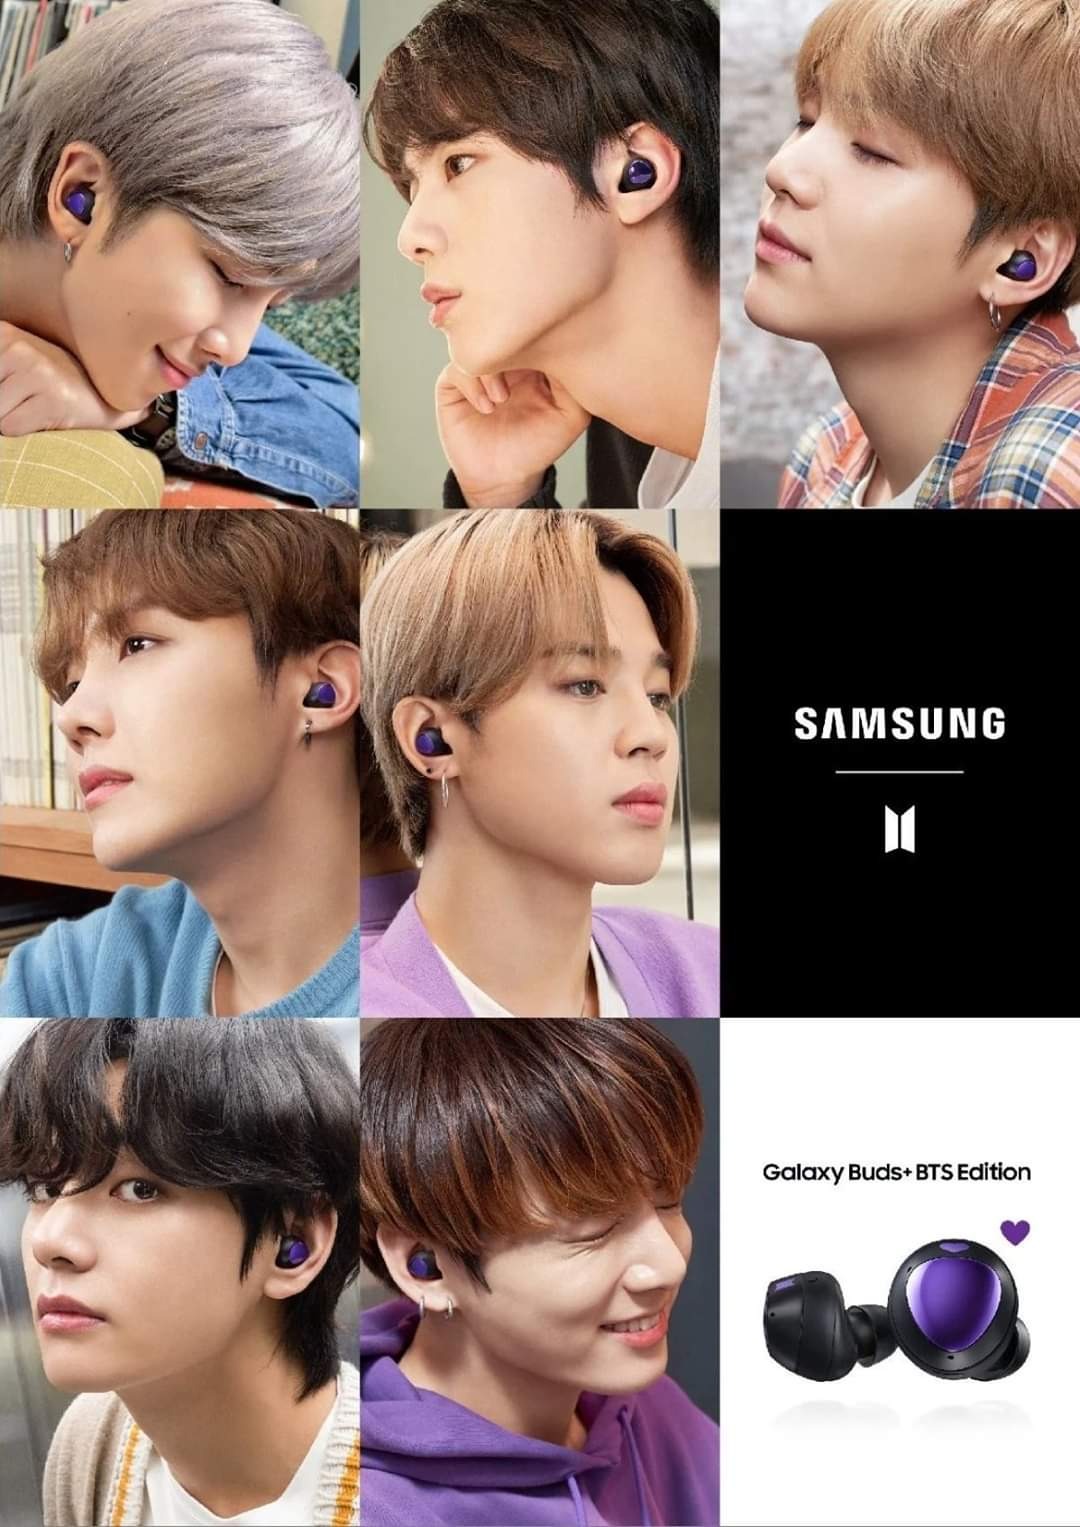 Samsung Galaxy Buds + BTS Edition